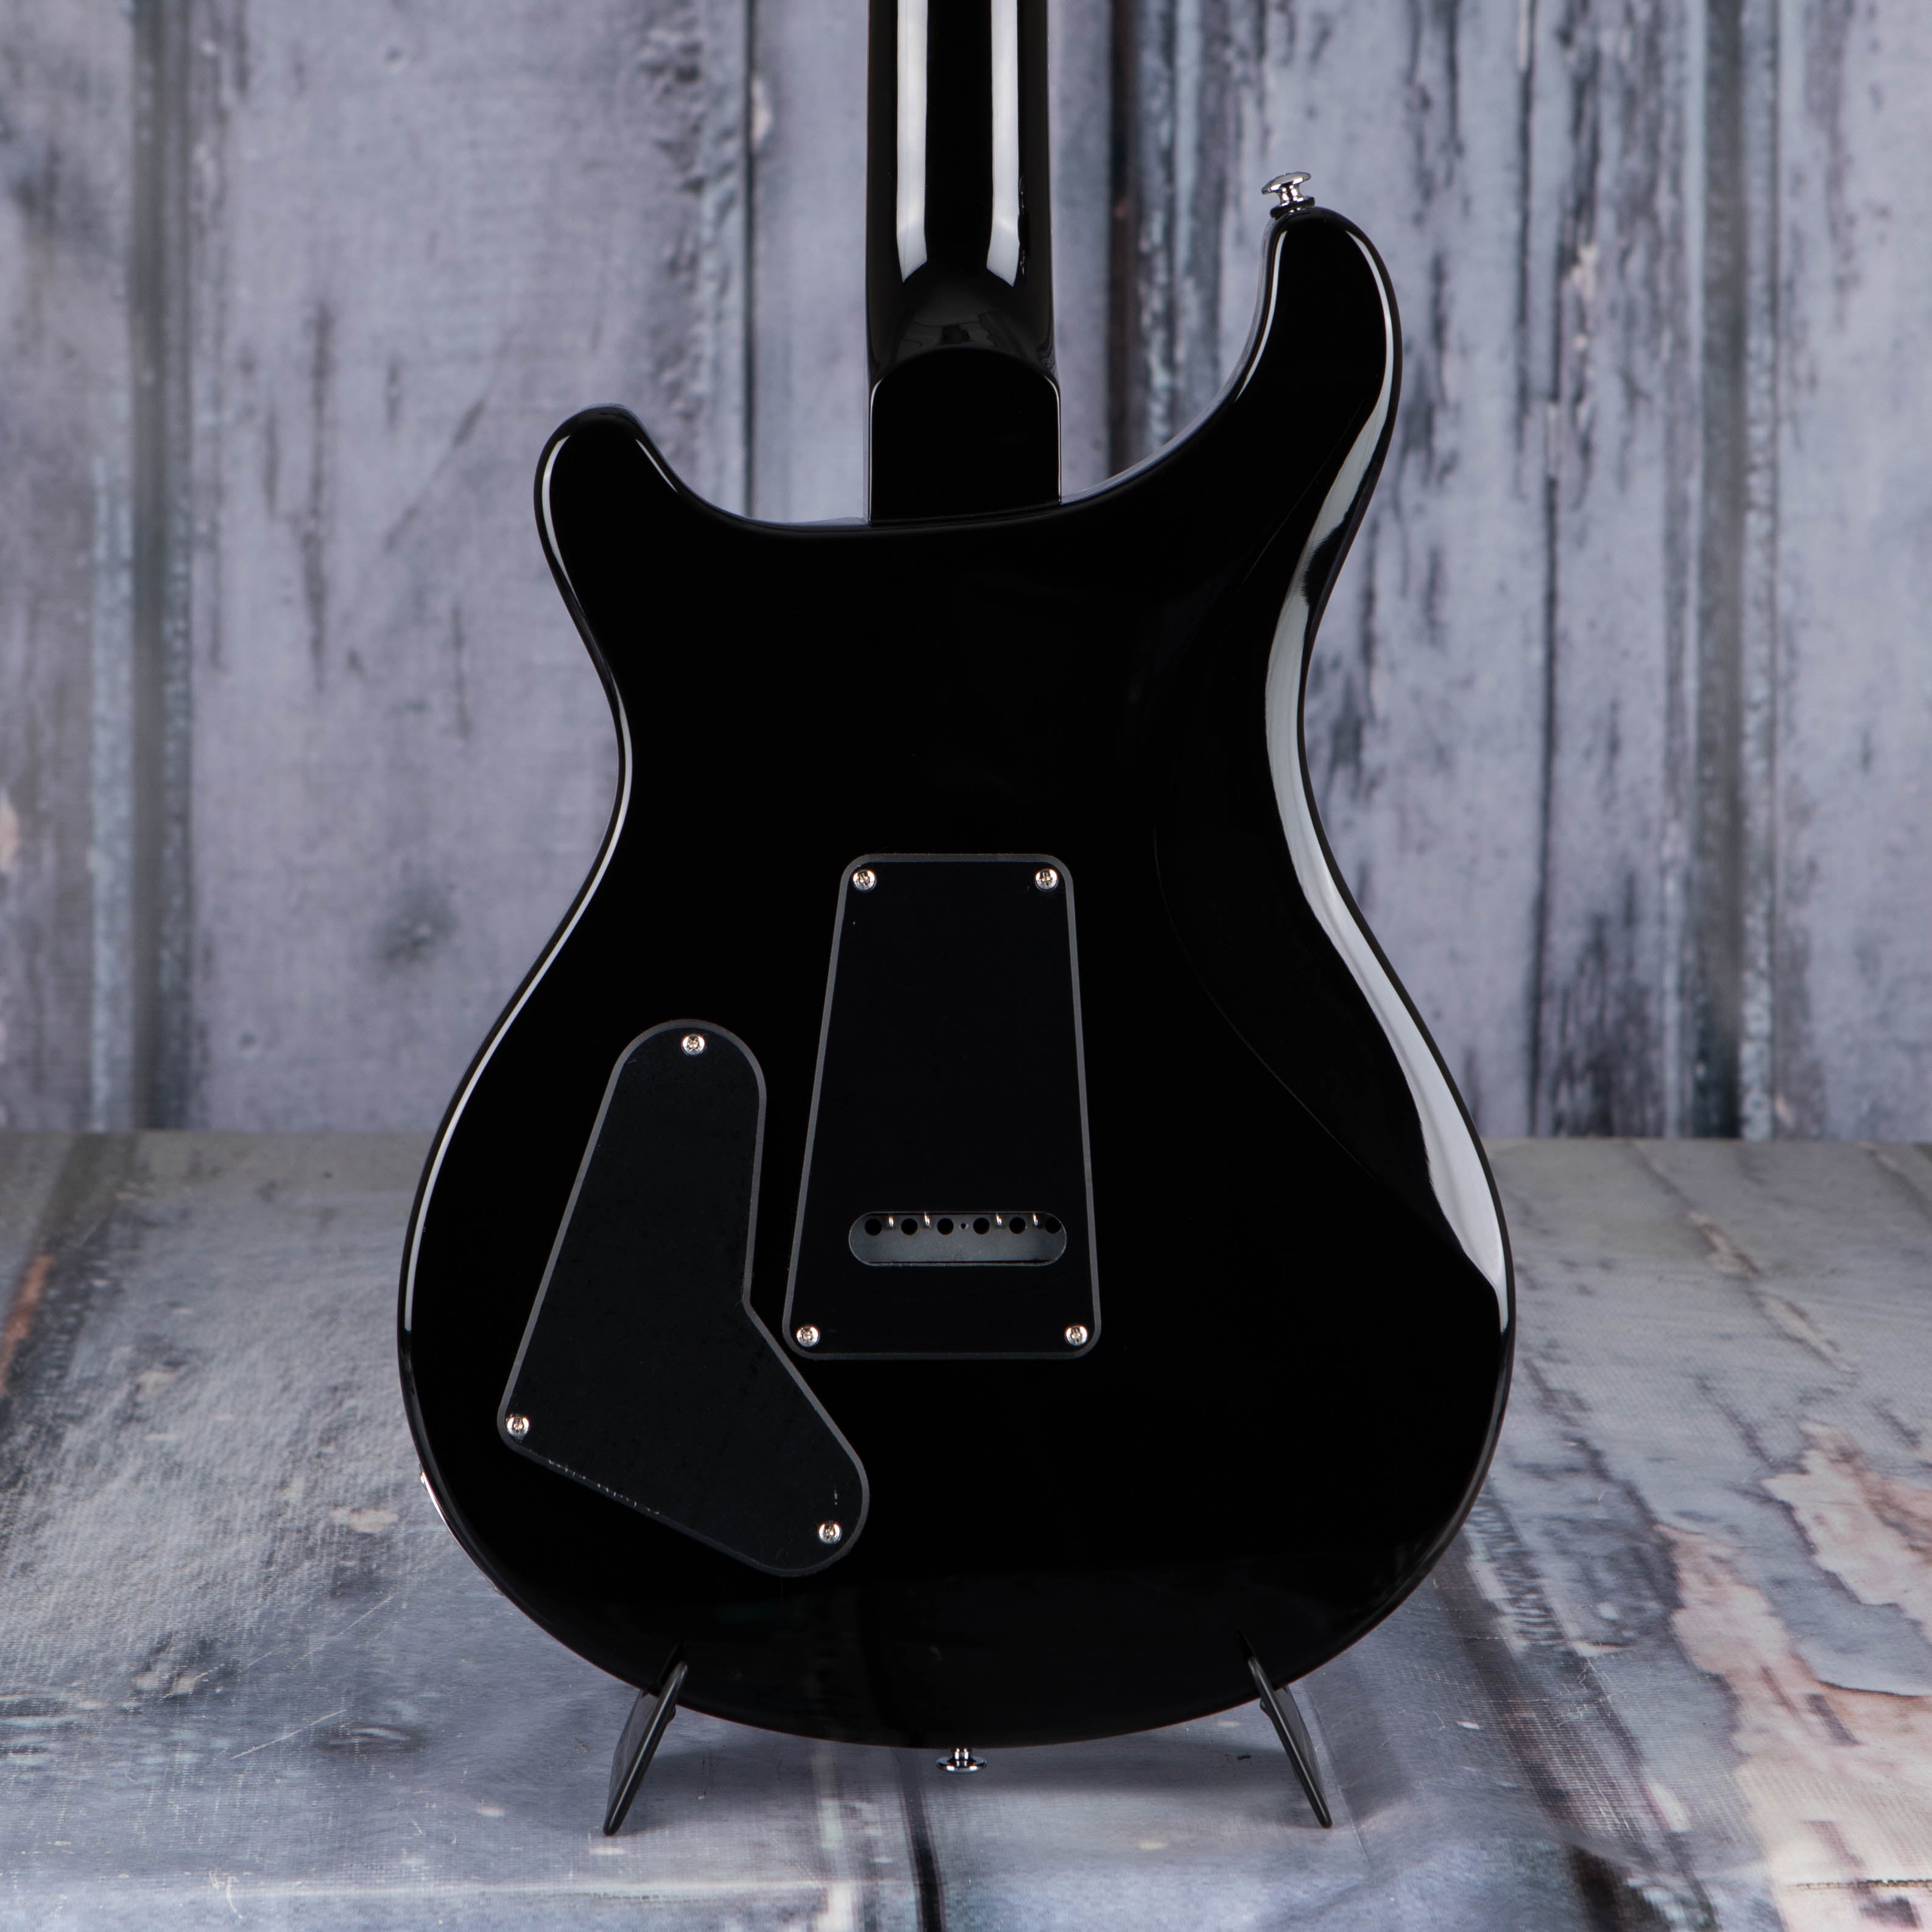 Paul Reed Smith SE Custom 22 Semi-Hollow Electric Guitar, Black Gold Sunburst, back closeup